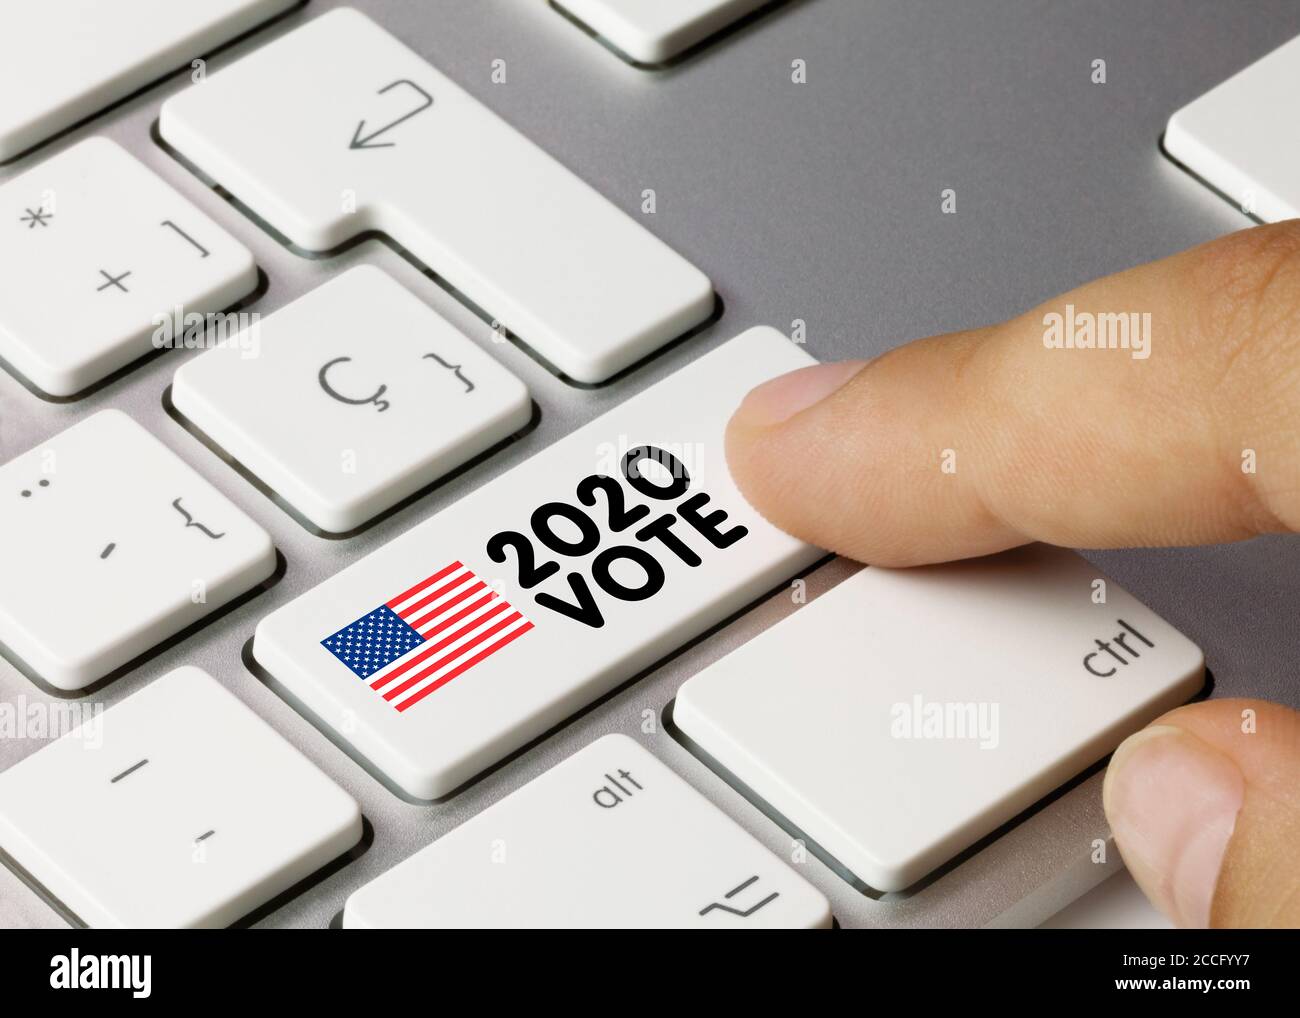 EEUU 2020 VOTE Written on White Key of Metallic Keyboard. Finger pressing key. Stock Photo